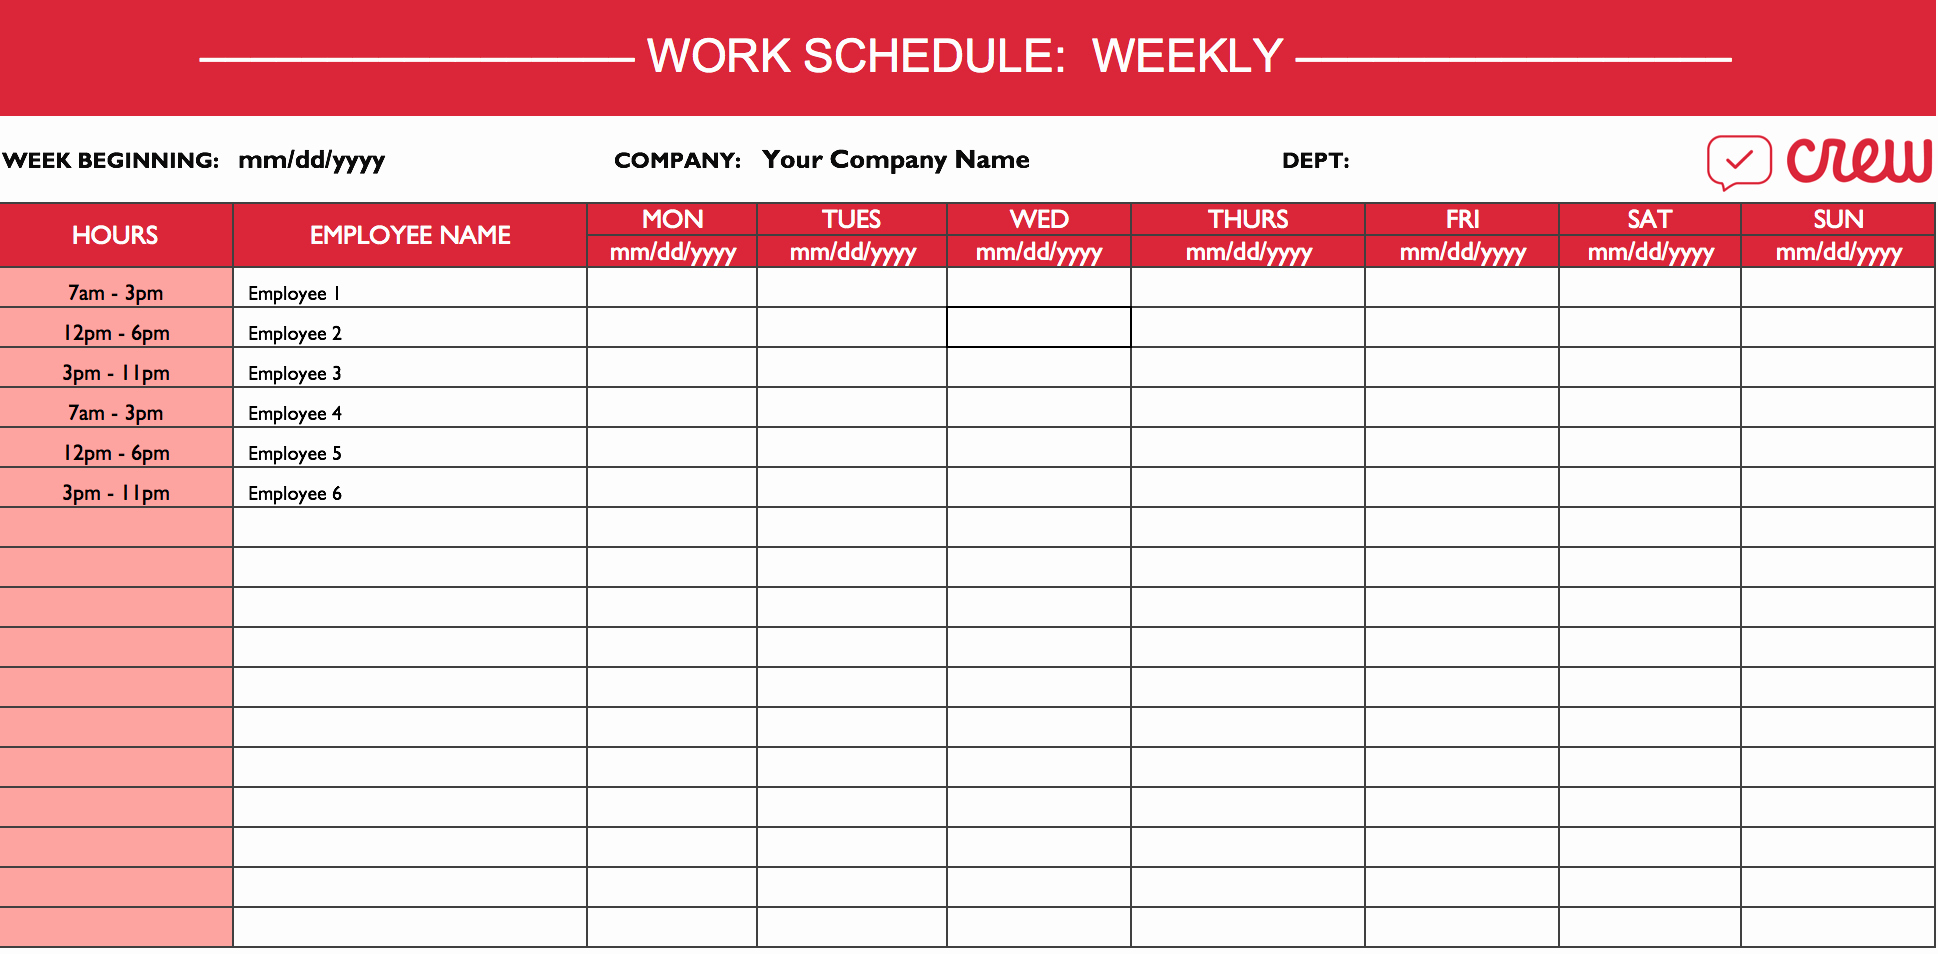 Working Hours Schedule Template Luxury Weekly Work Schedule Template I Crew